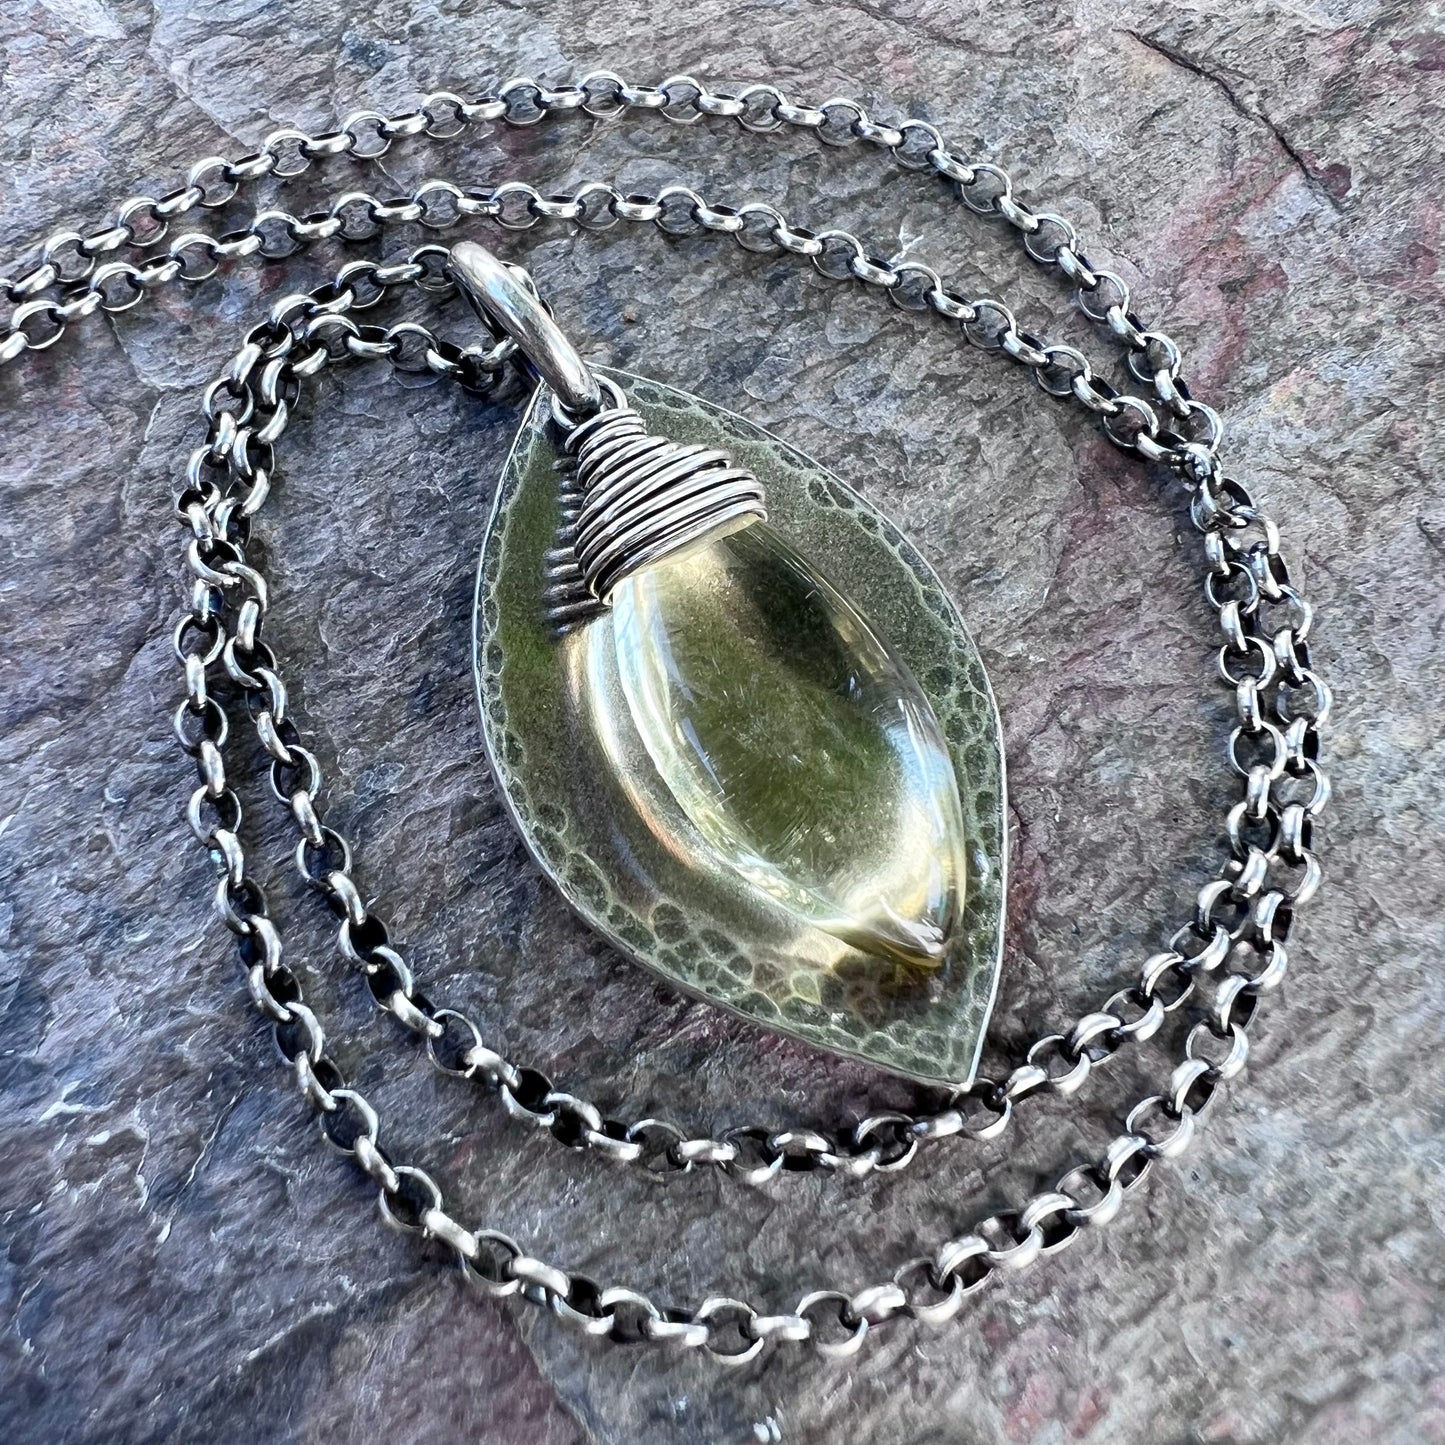 Lemon Quartz and Sterling Silver Necklace - Lemon Quartz and Sterling Silver Marquise Pendant on Sterling Silver Chain